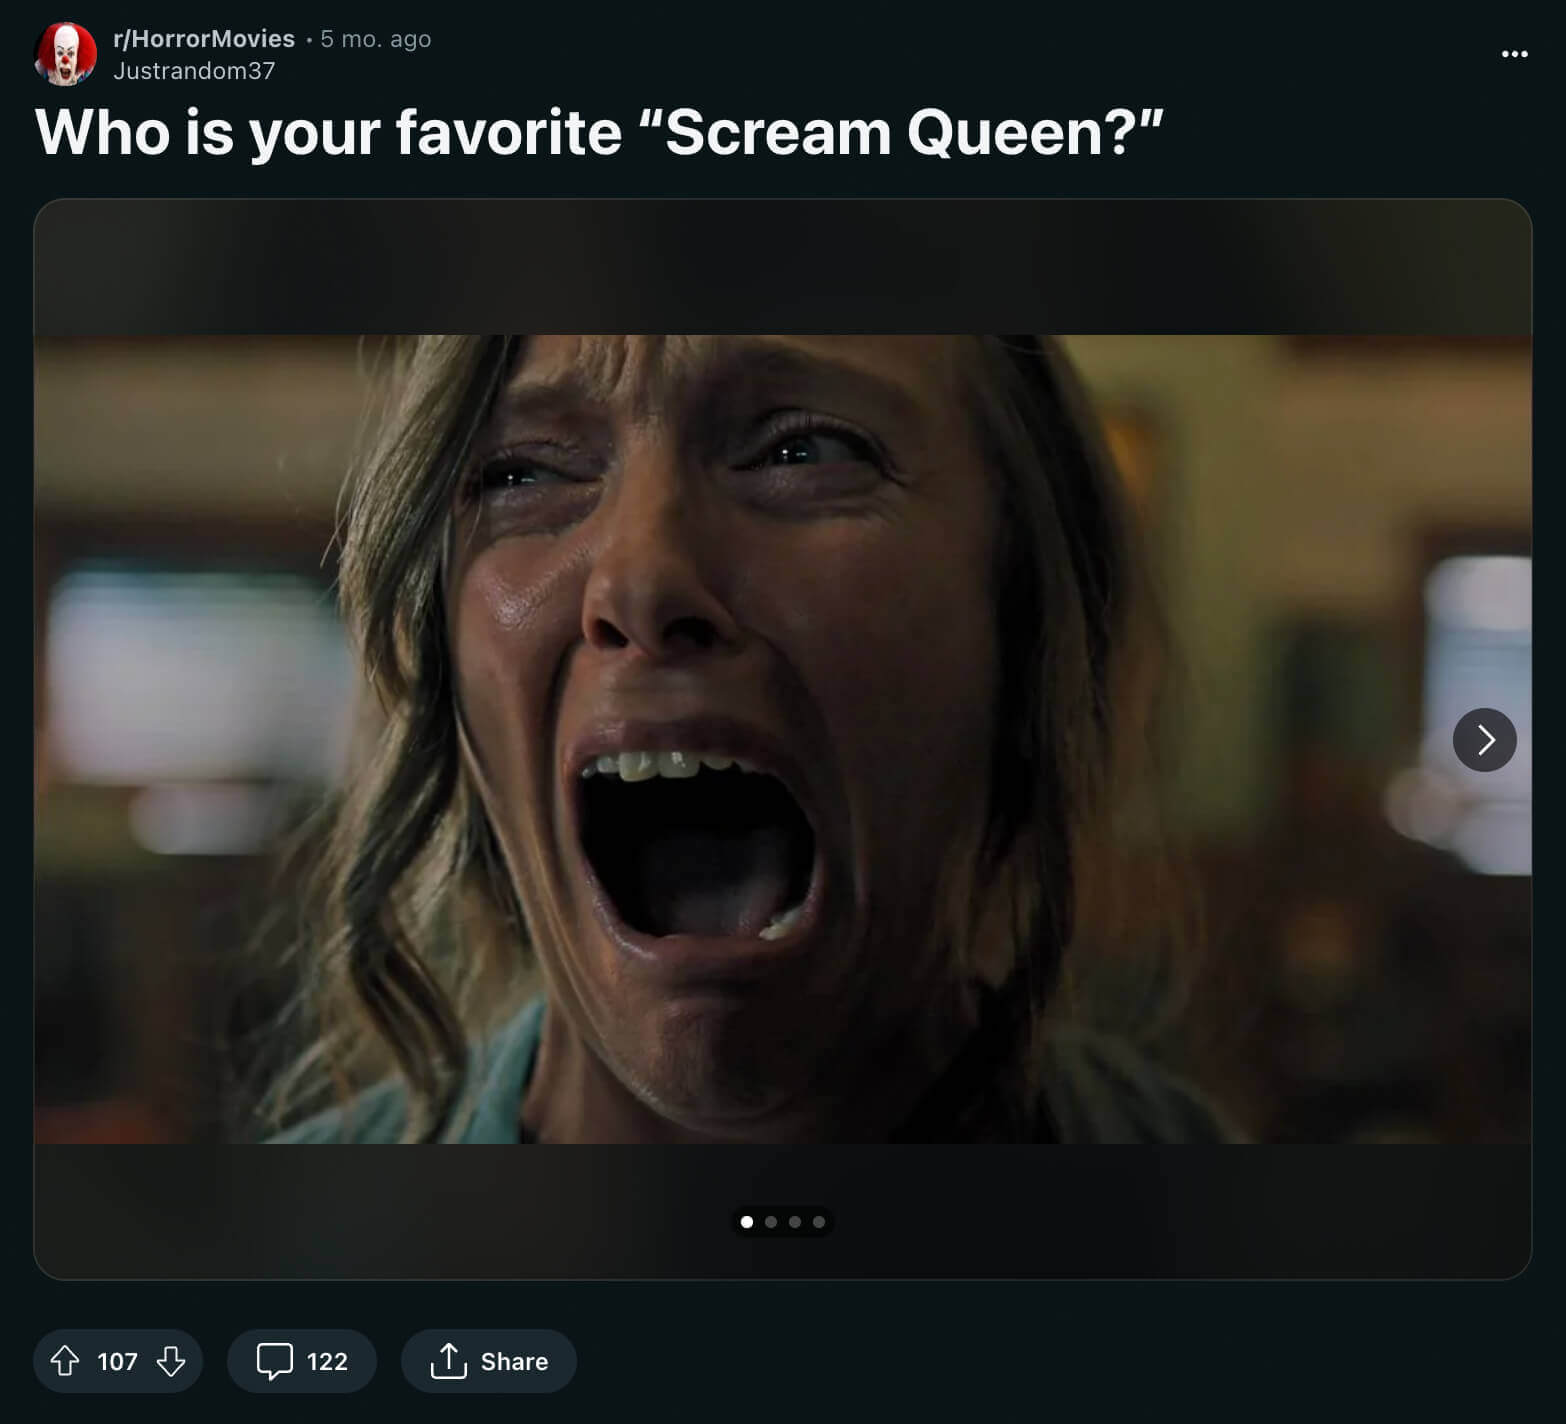 Scream queen question posed to Redditors